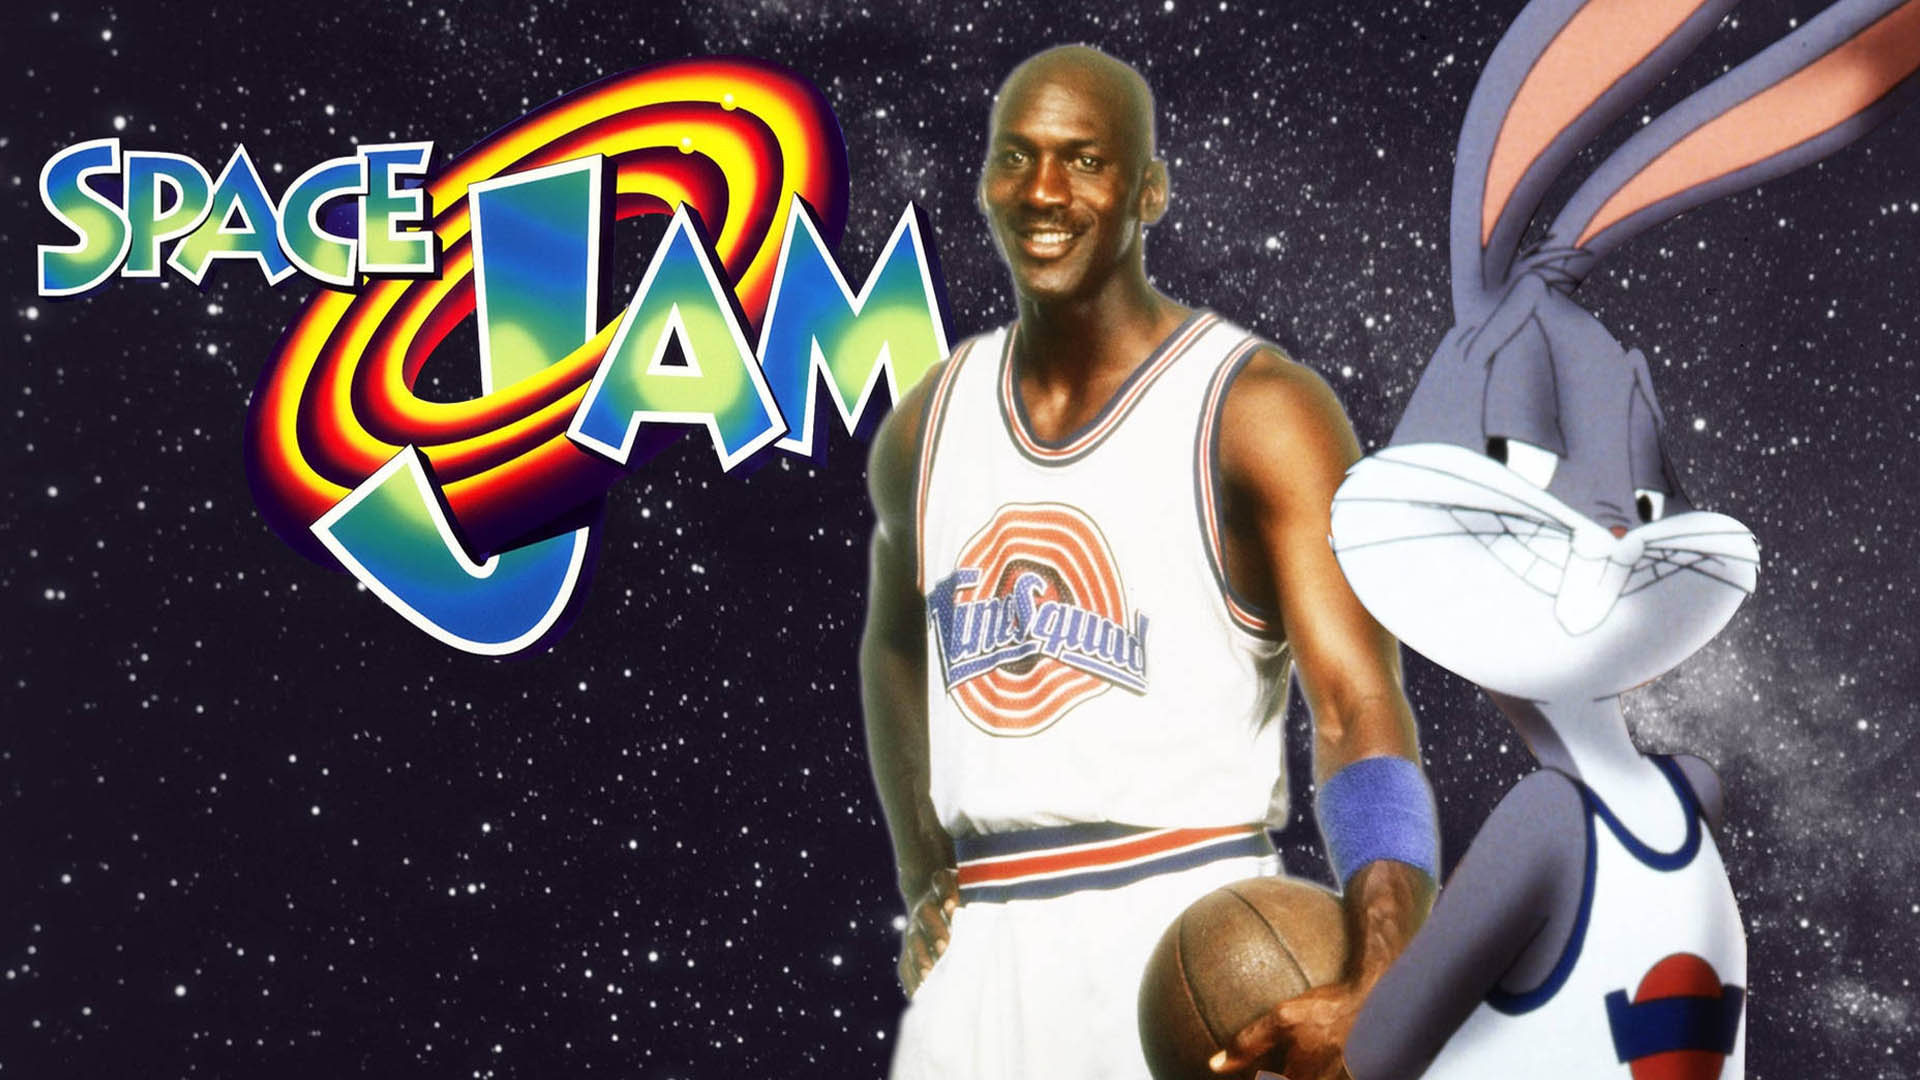 Space Jam movie poster with Michael Jordan